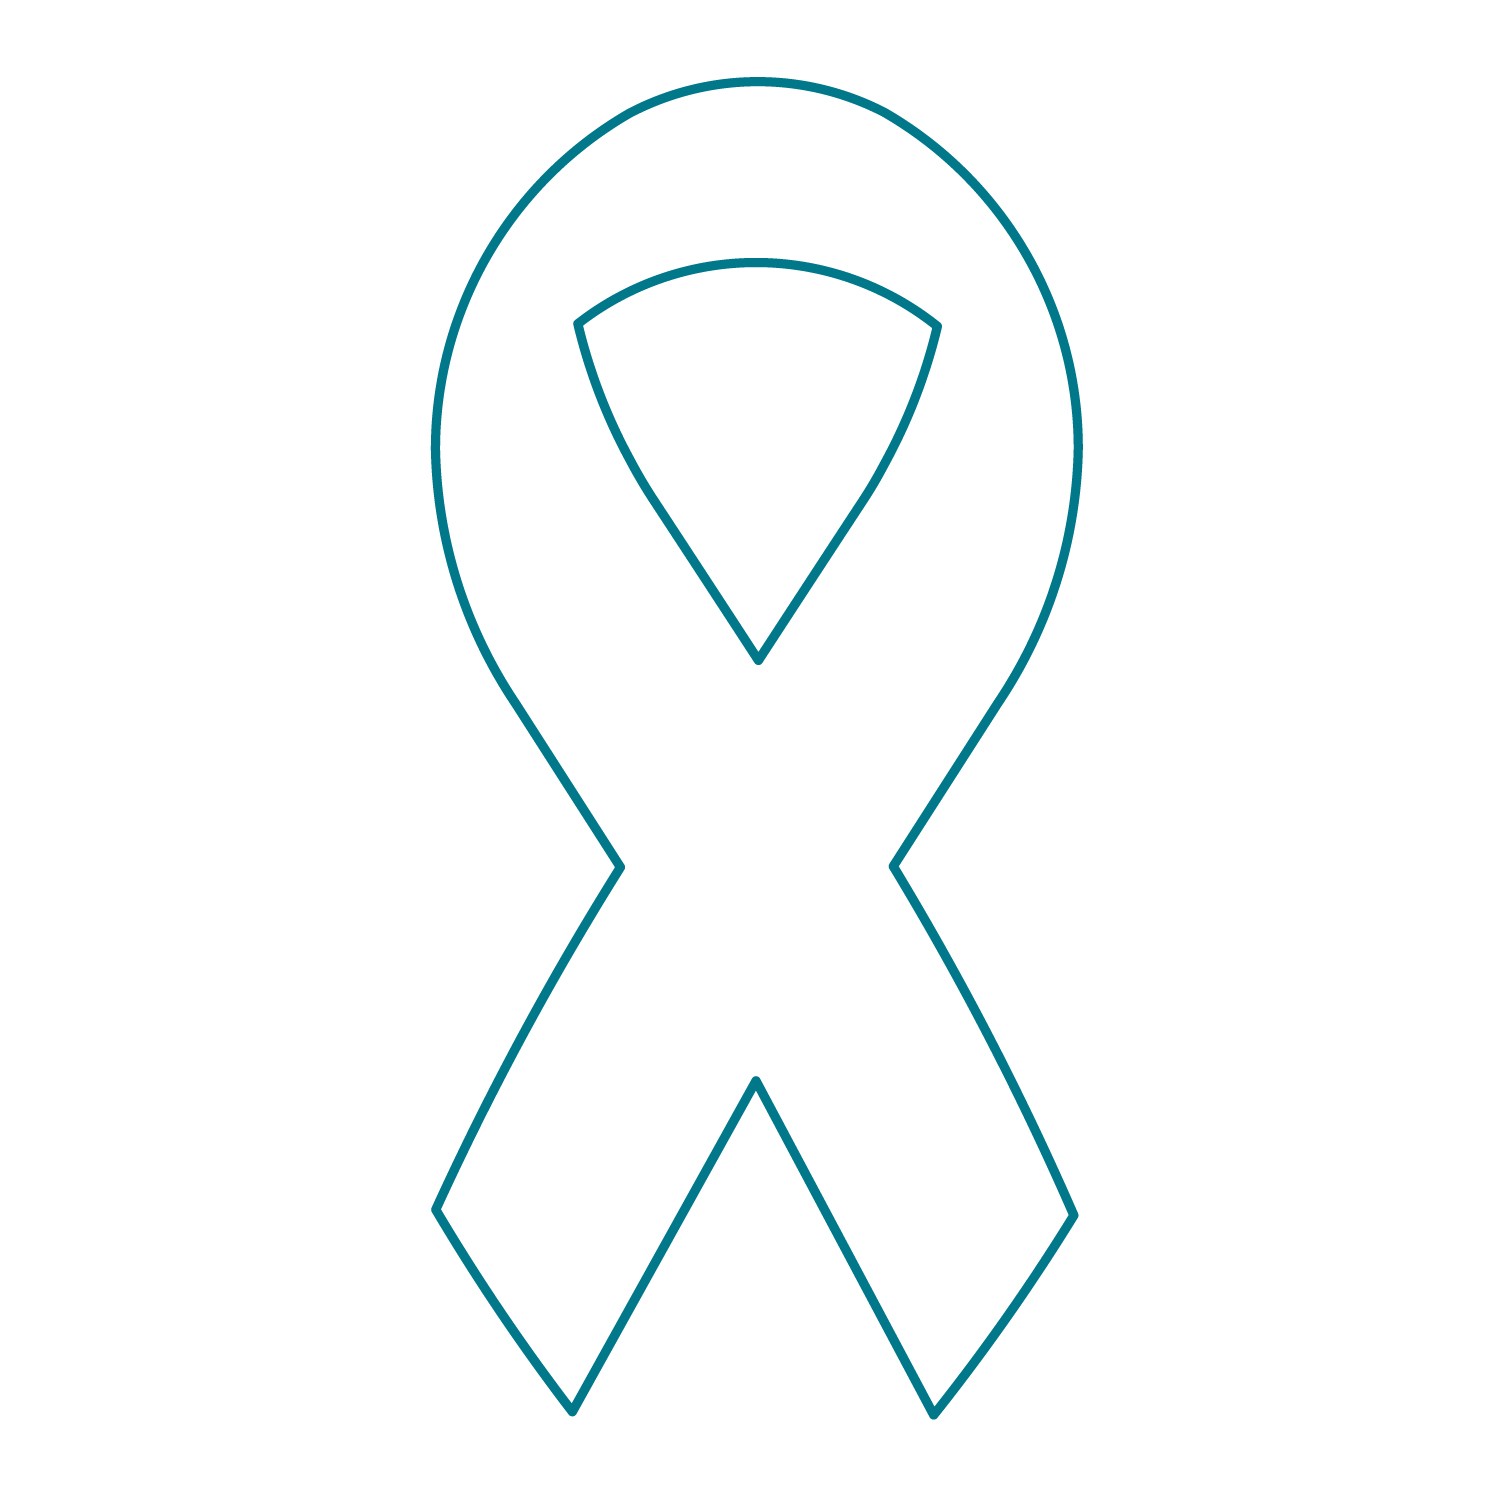 raise-awareness-with-symbolic-awareness-ribbons-awareness-ribbon